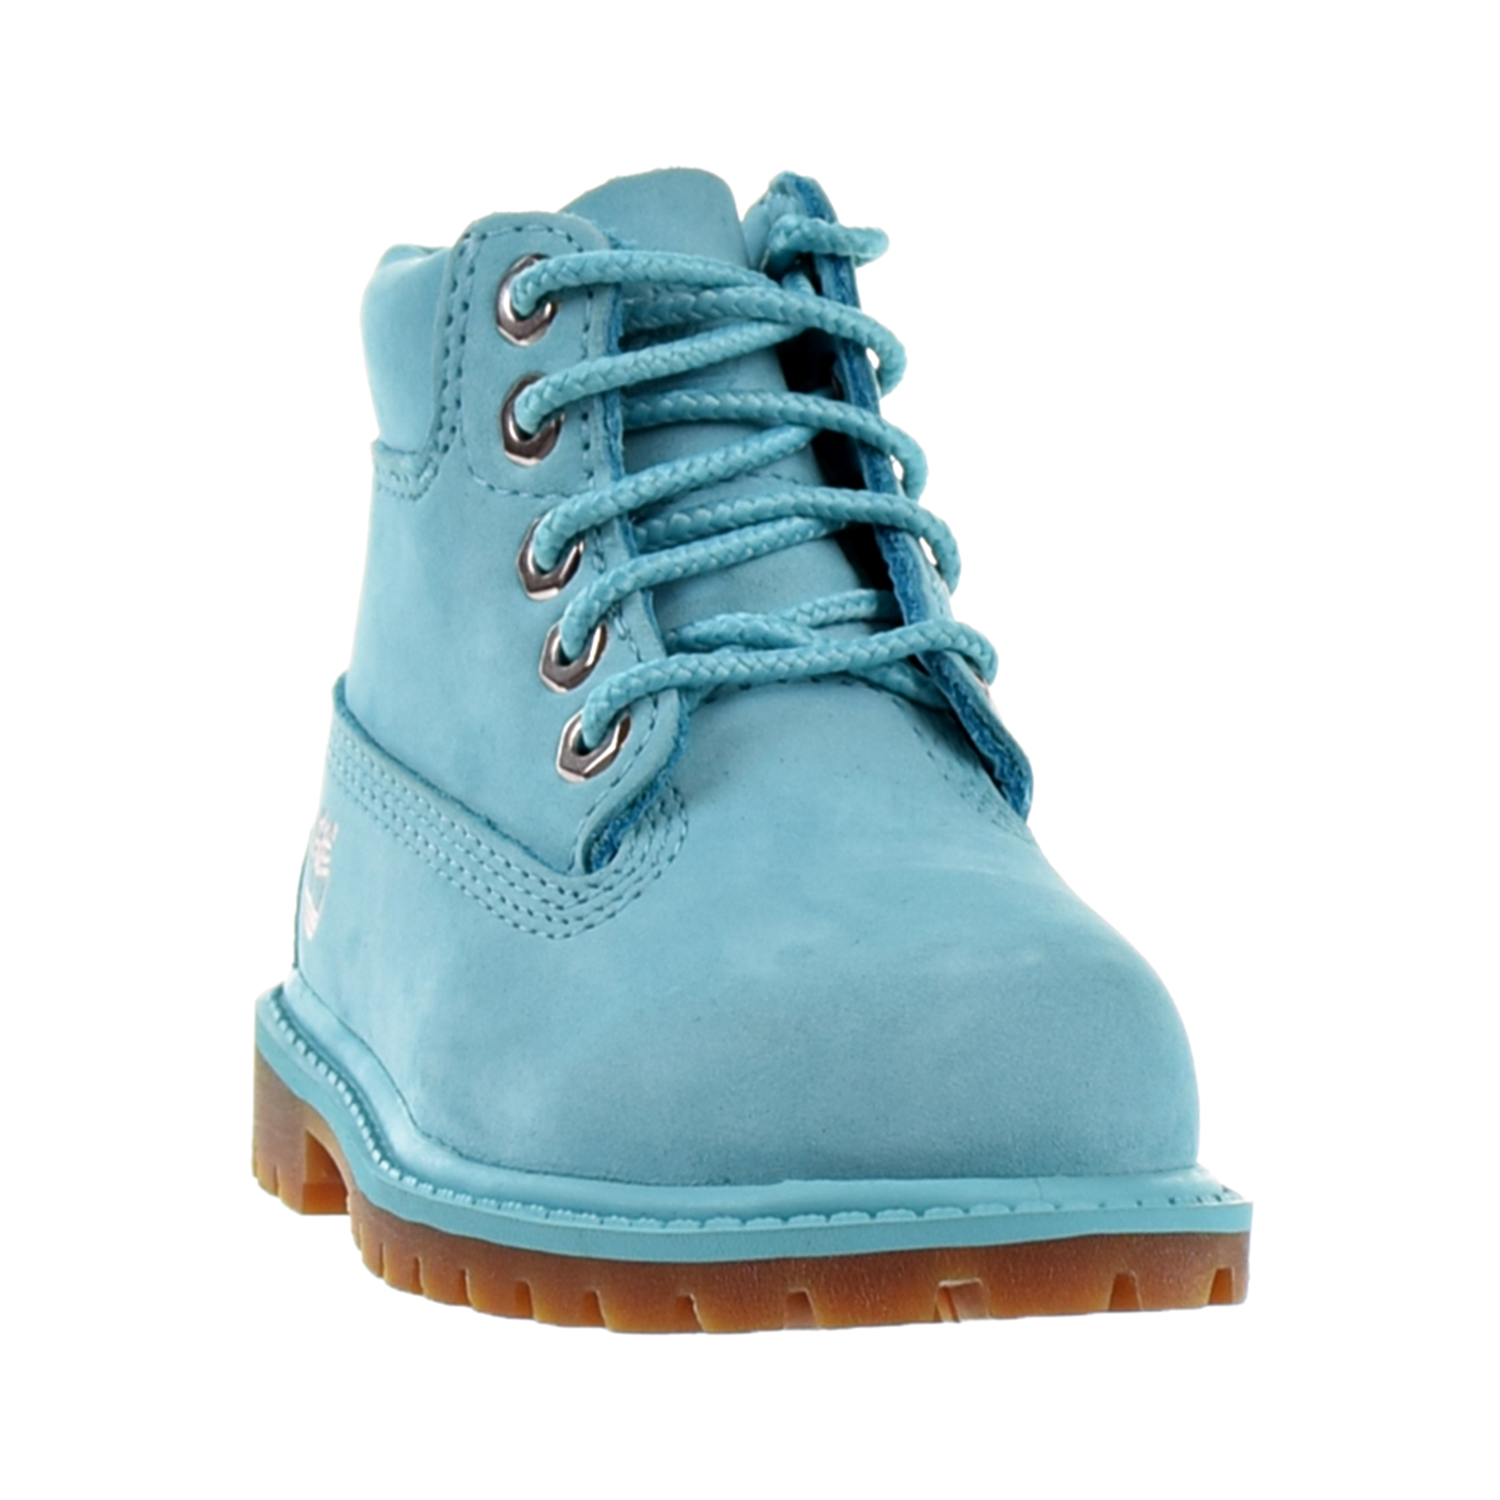 Timberland 6 Inch Premium Toddler Boots Blue tb0a1kro | eBay